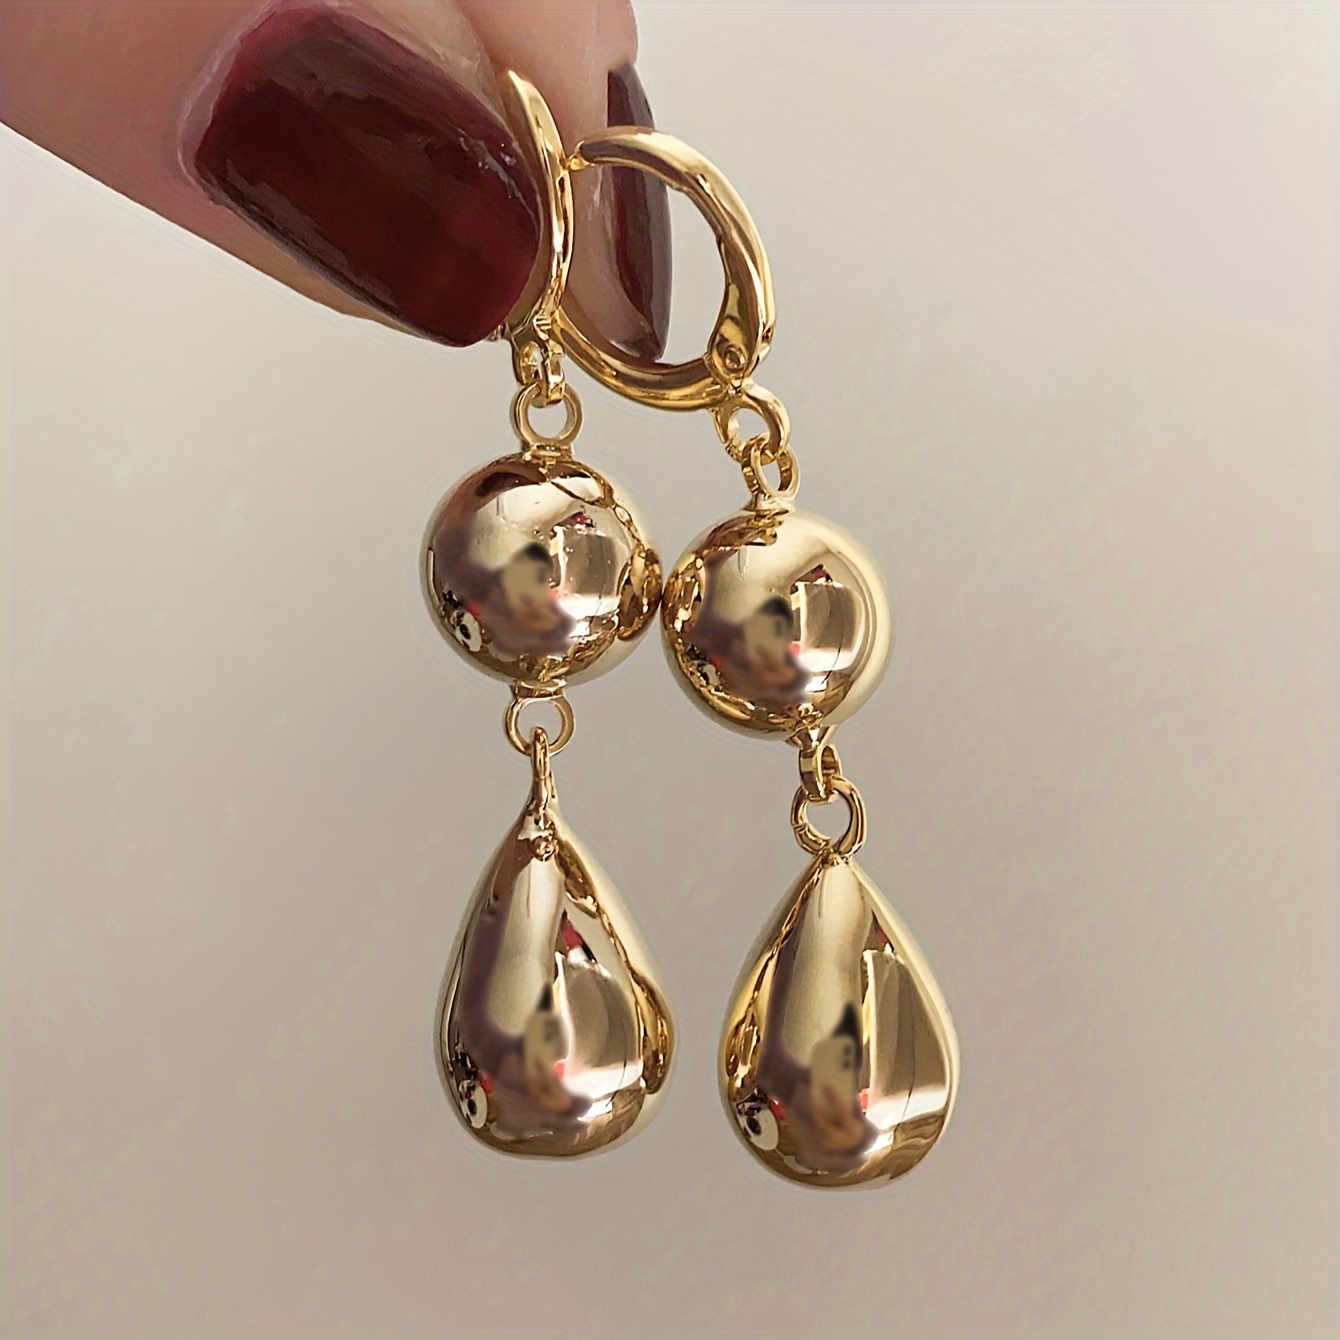 1Box 24pcs 6 Styles Cubic Zirconia Decor Earring Hooks 18K Golden Plated  Ear Wire Fish Hooks With Loop For DIY Earrings Jewelry Making For Women  Girls